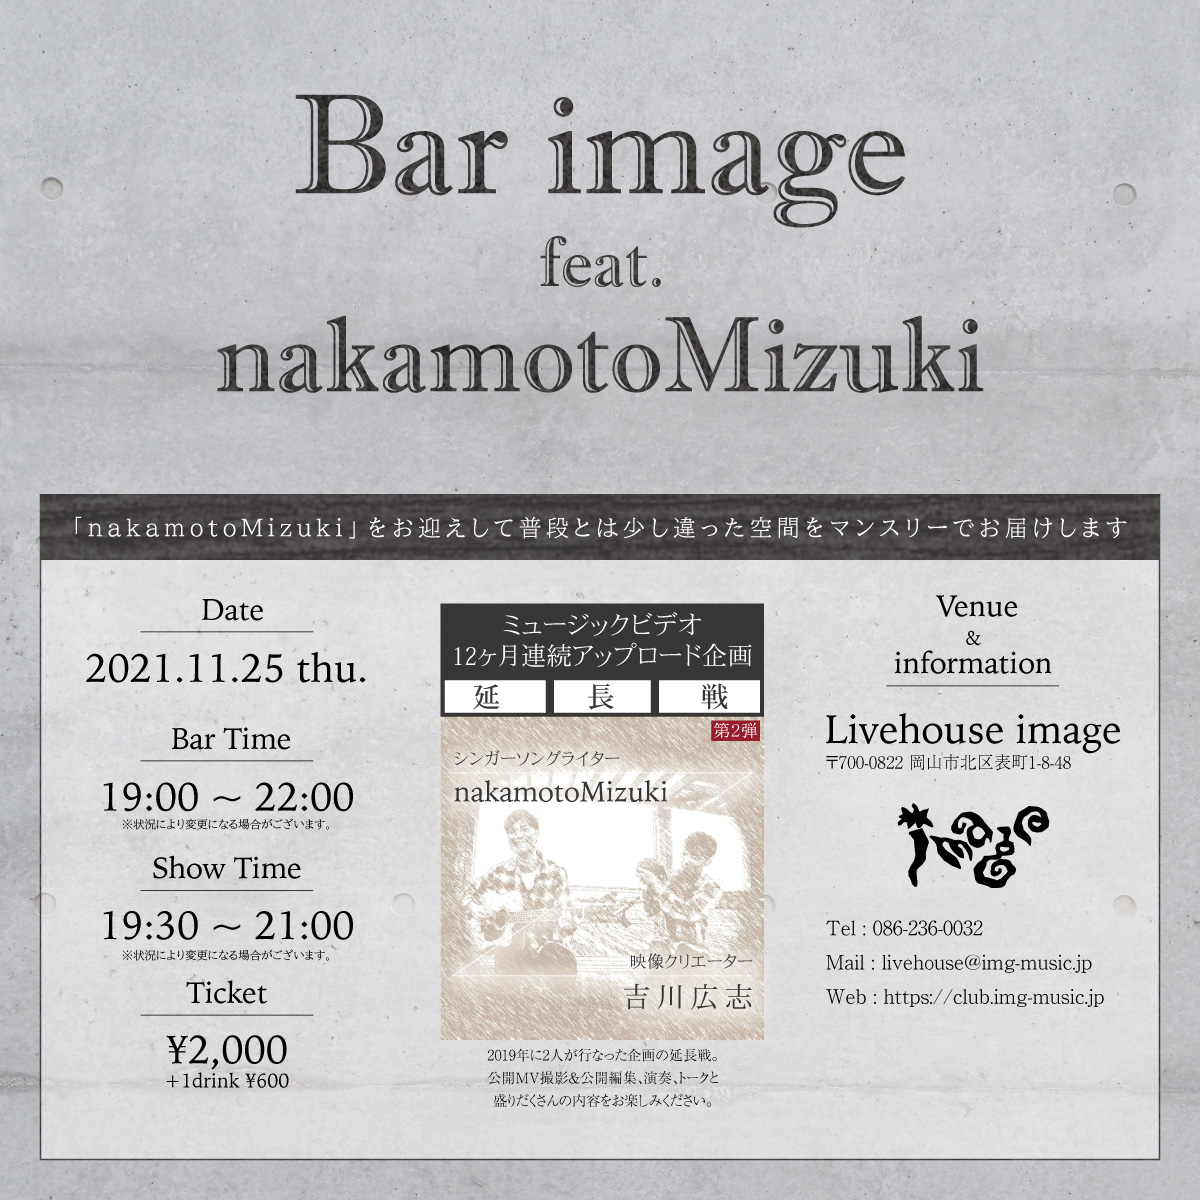 Bar image feat. nakamotoMizuki